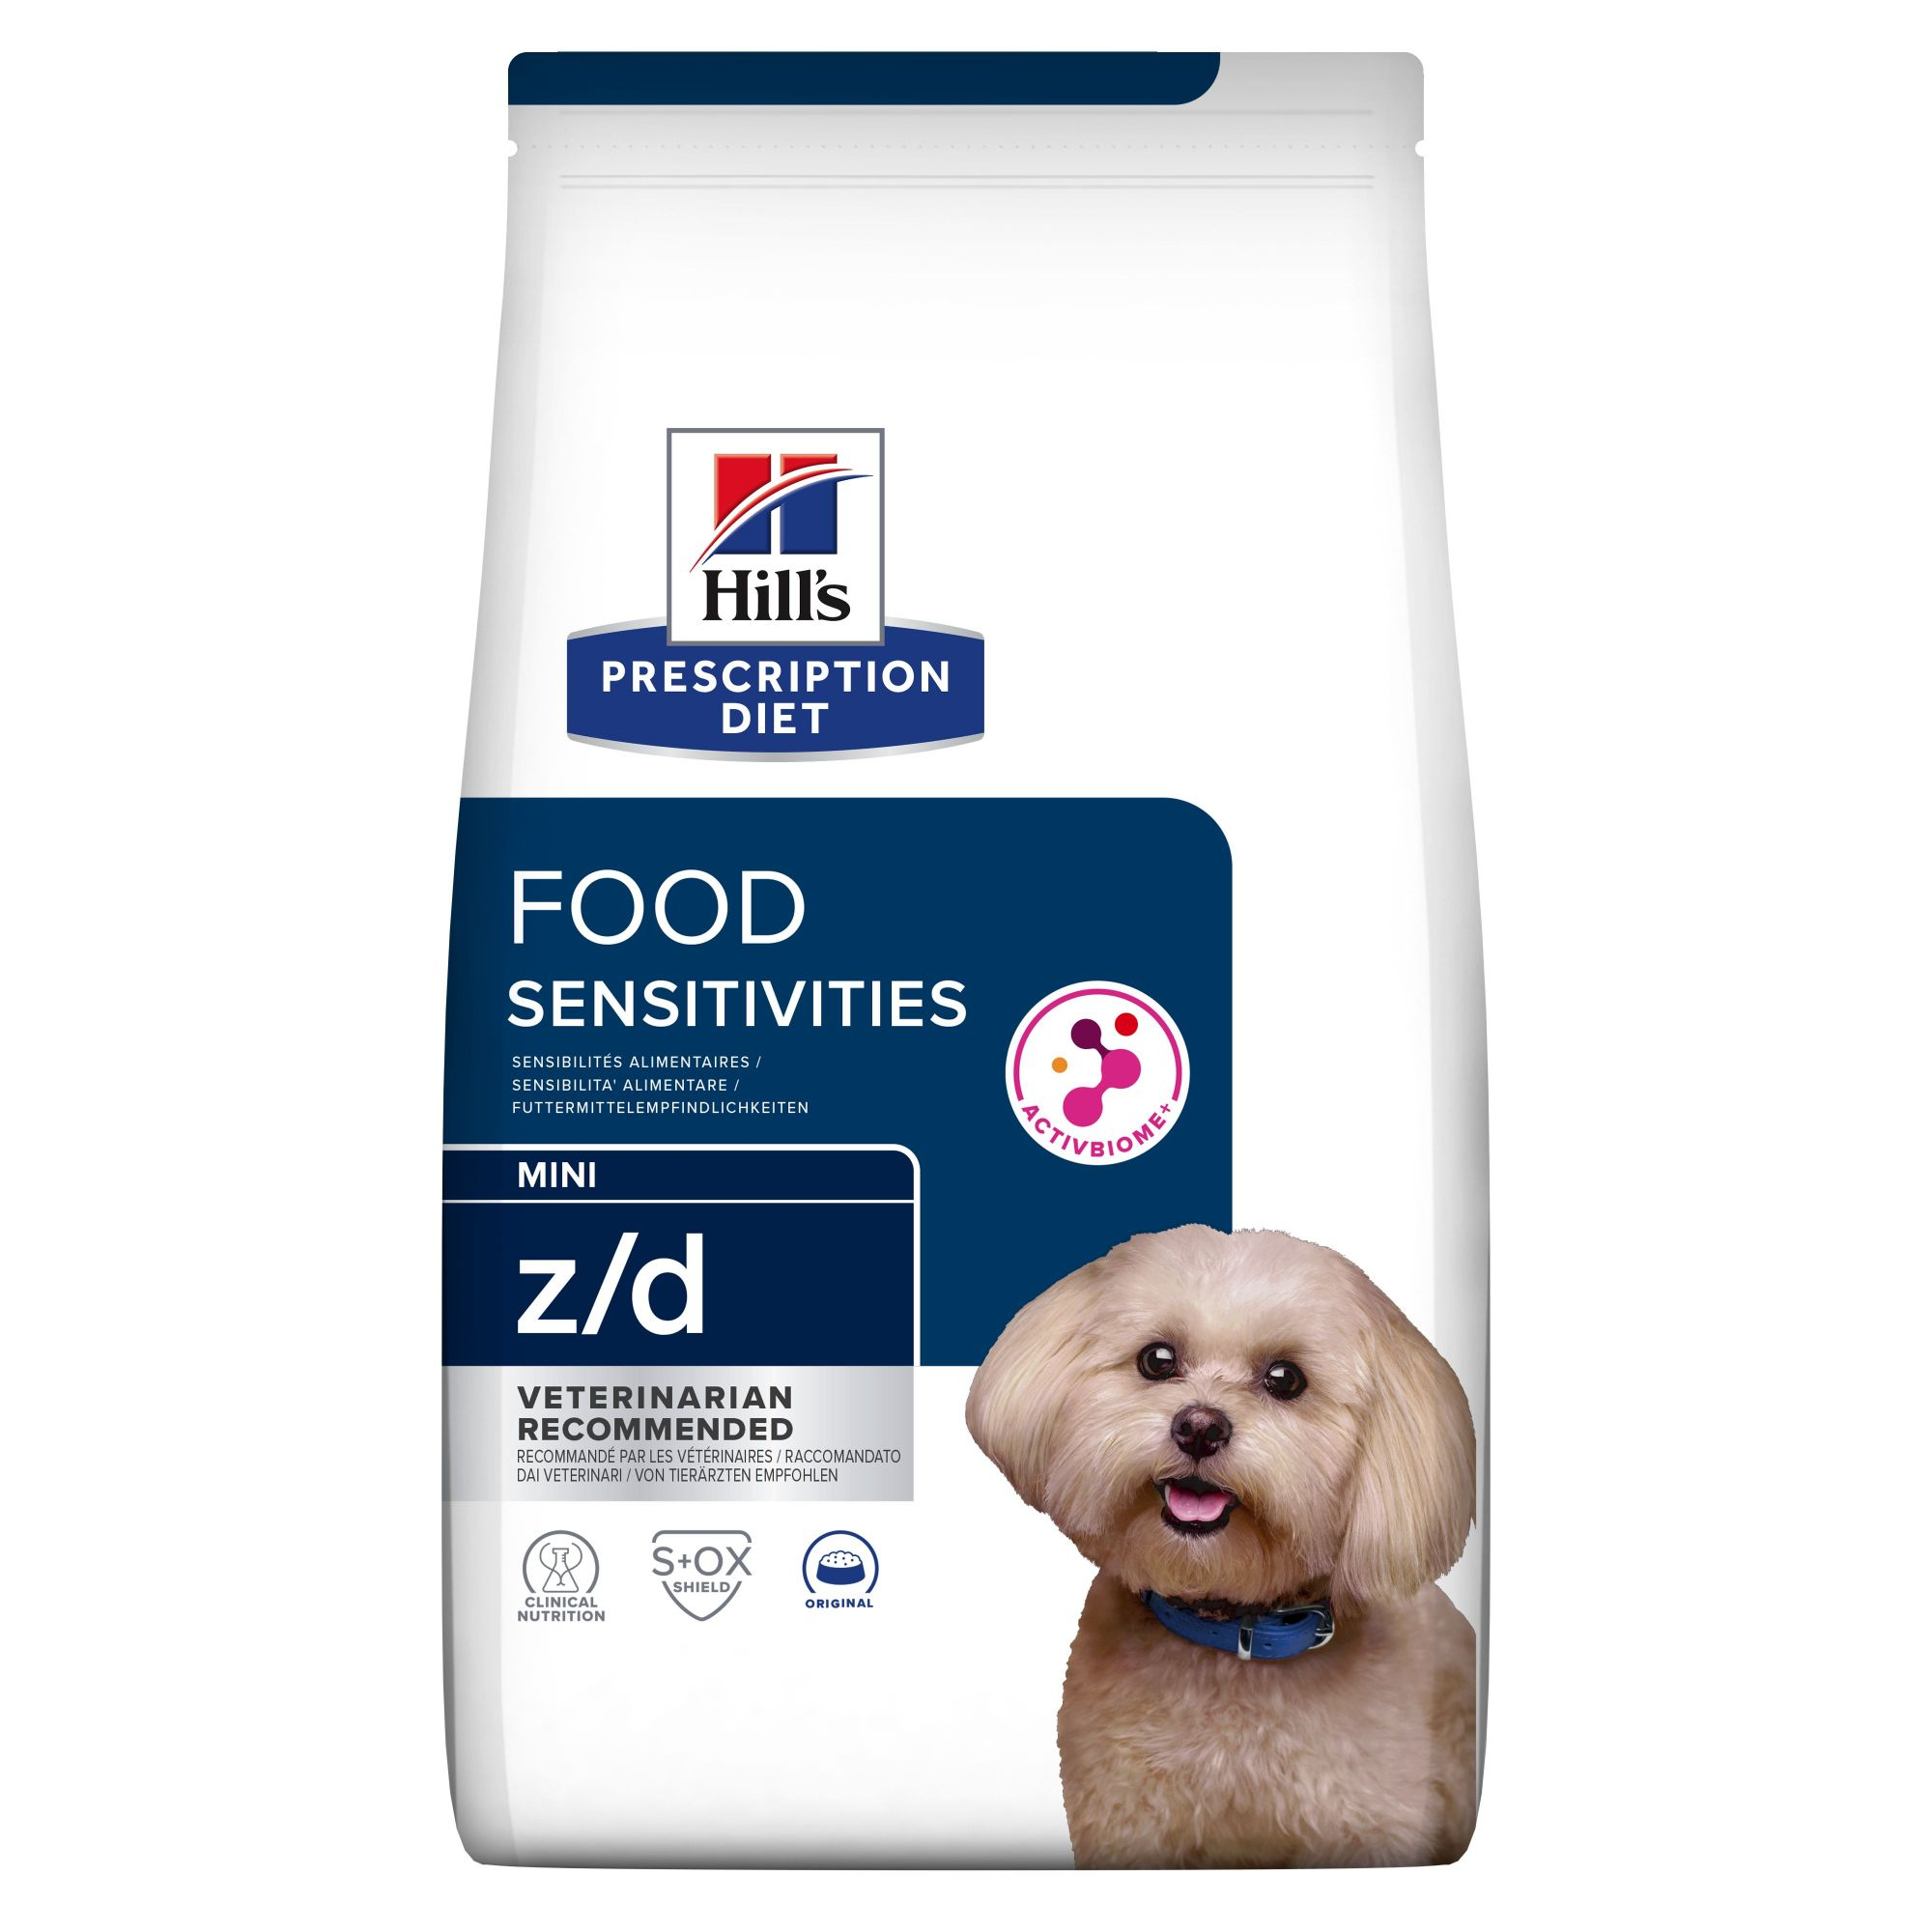 Hill's Prescription Diet z/d Food Sensitivities Mini Trockenfutter für kleine Hunde